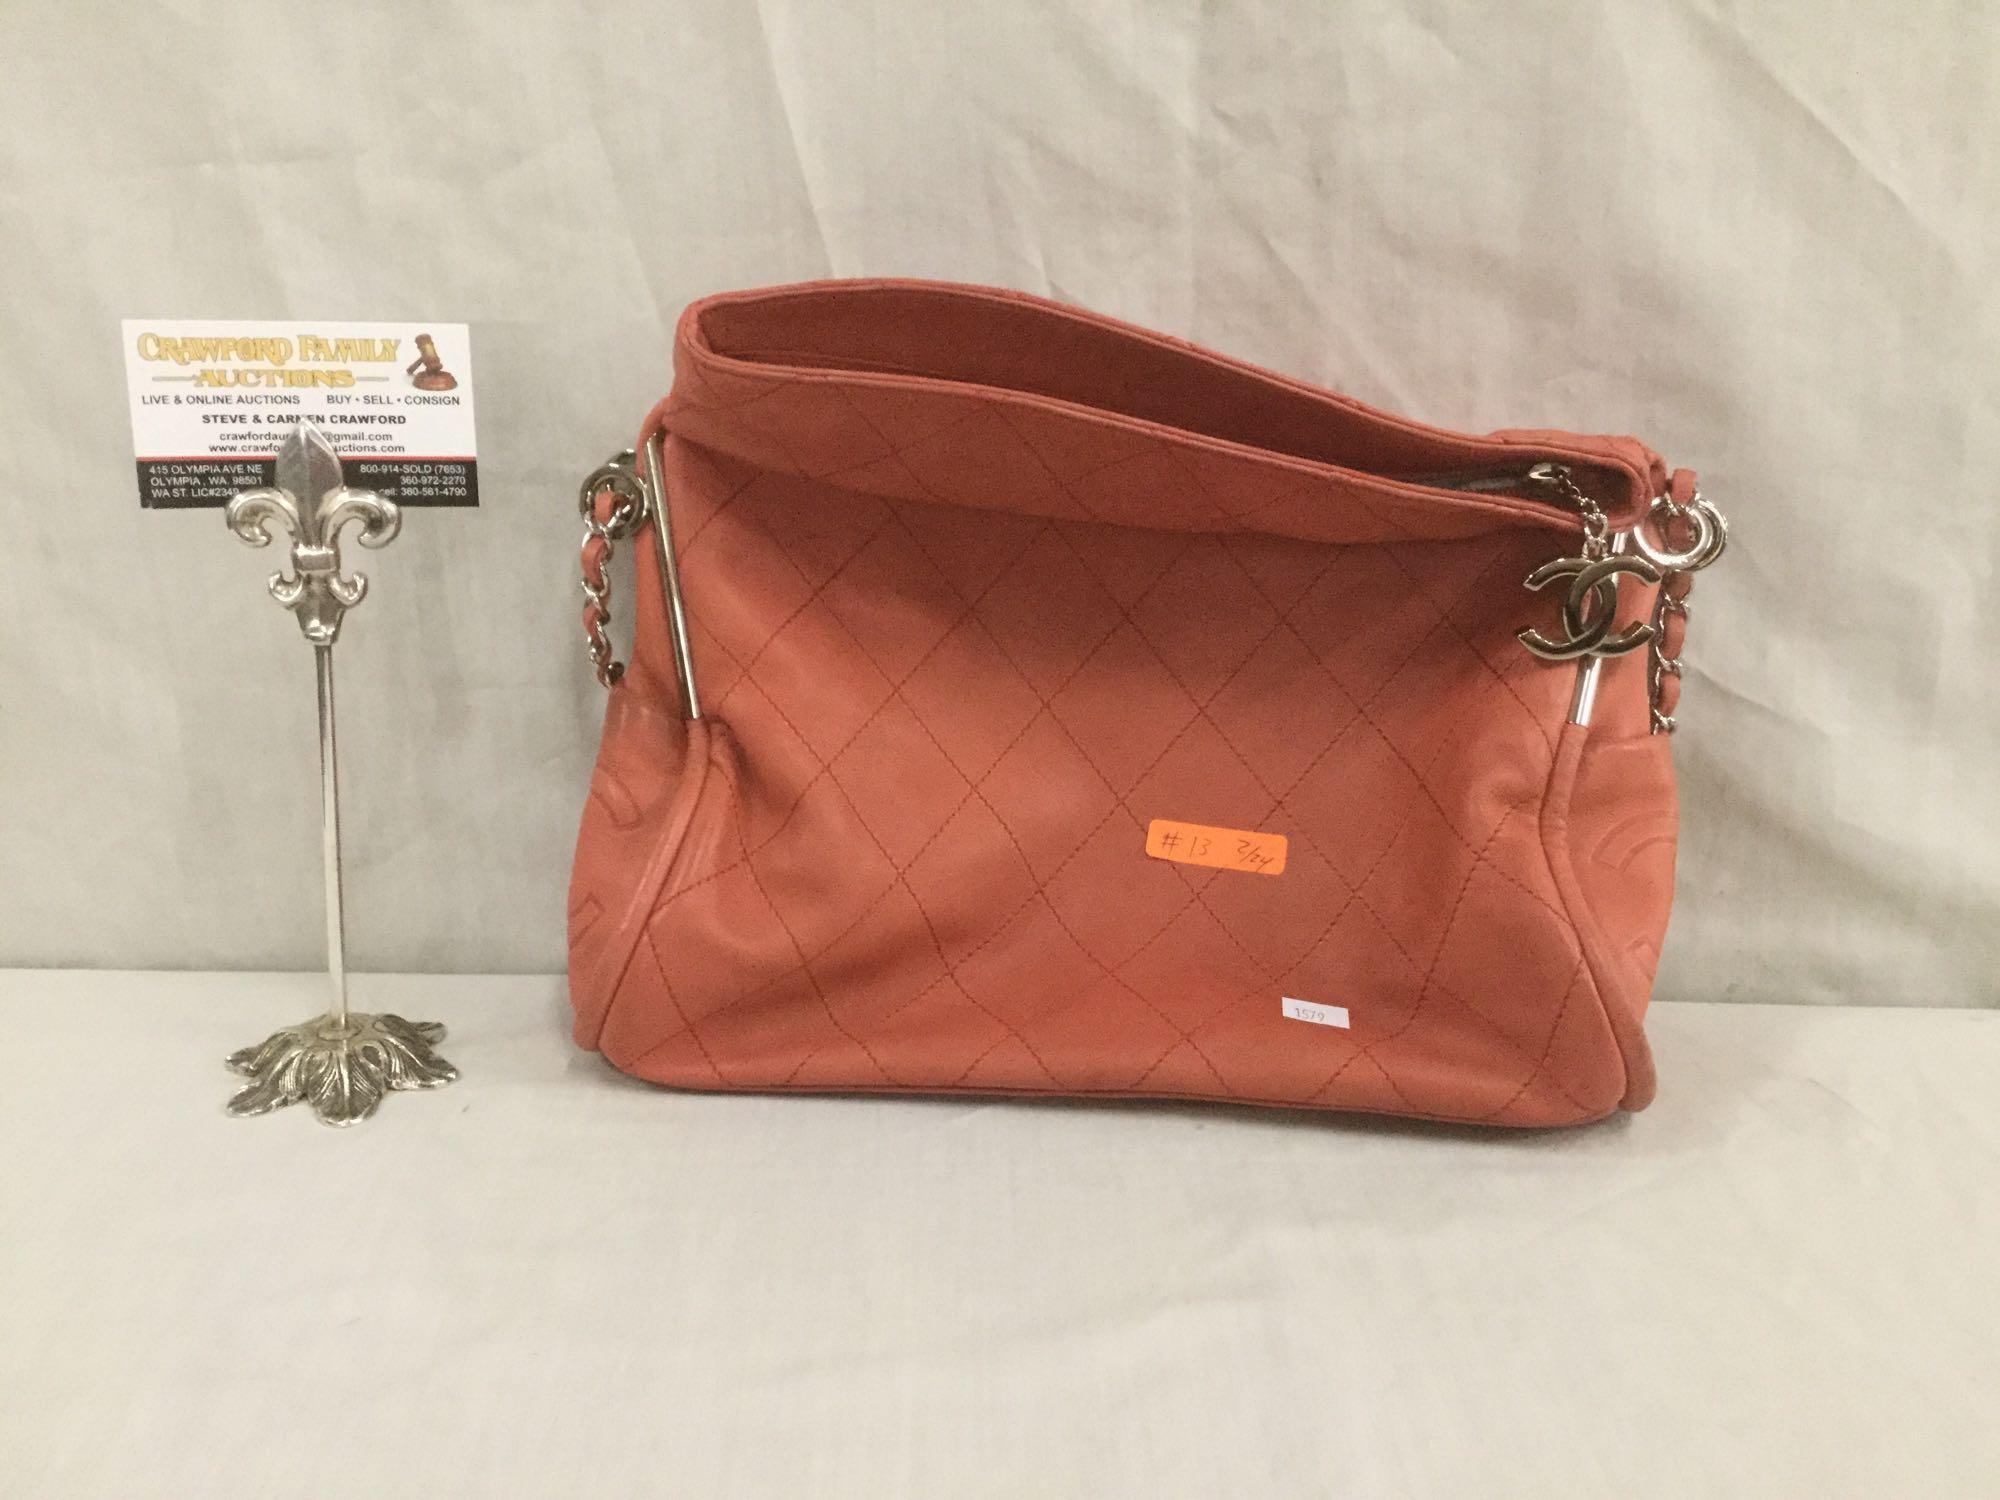 Lightly used vintage Chanel orange/pink shoulder bag w/ diamond stitching - approx $3500 value